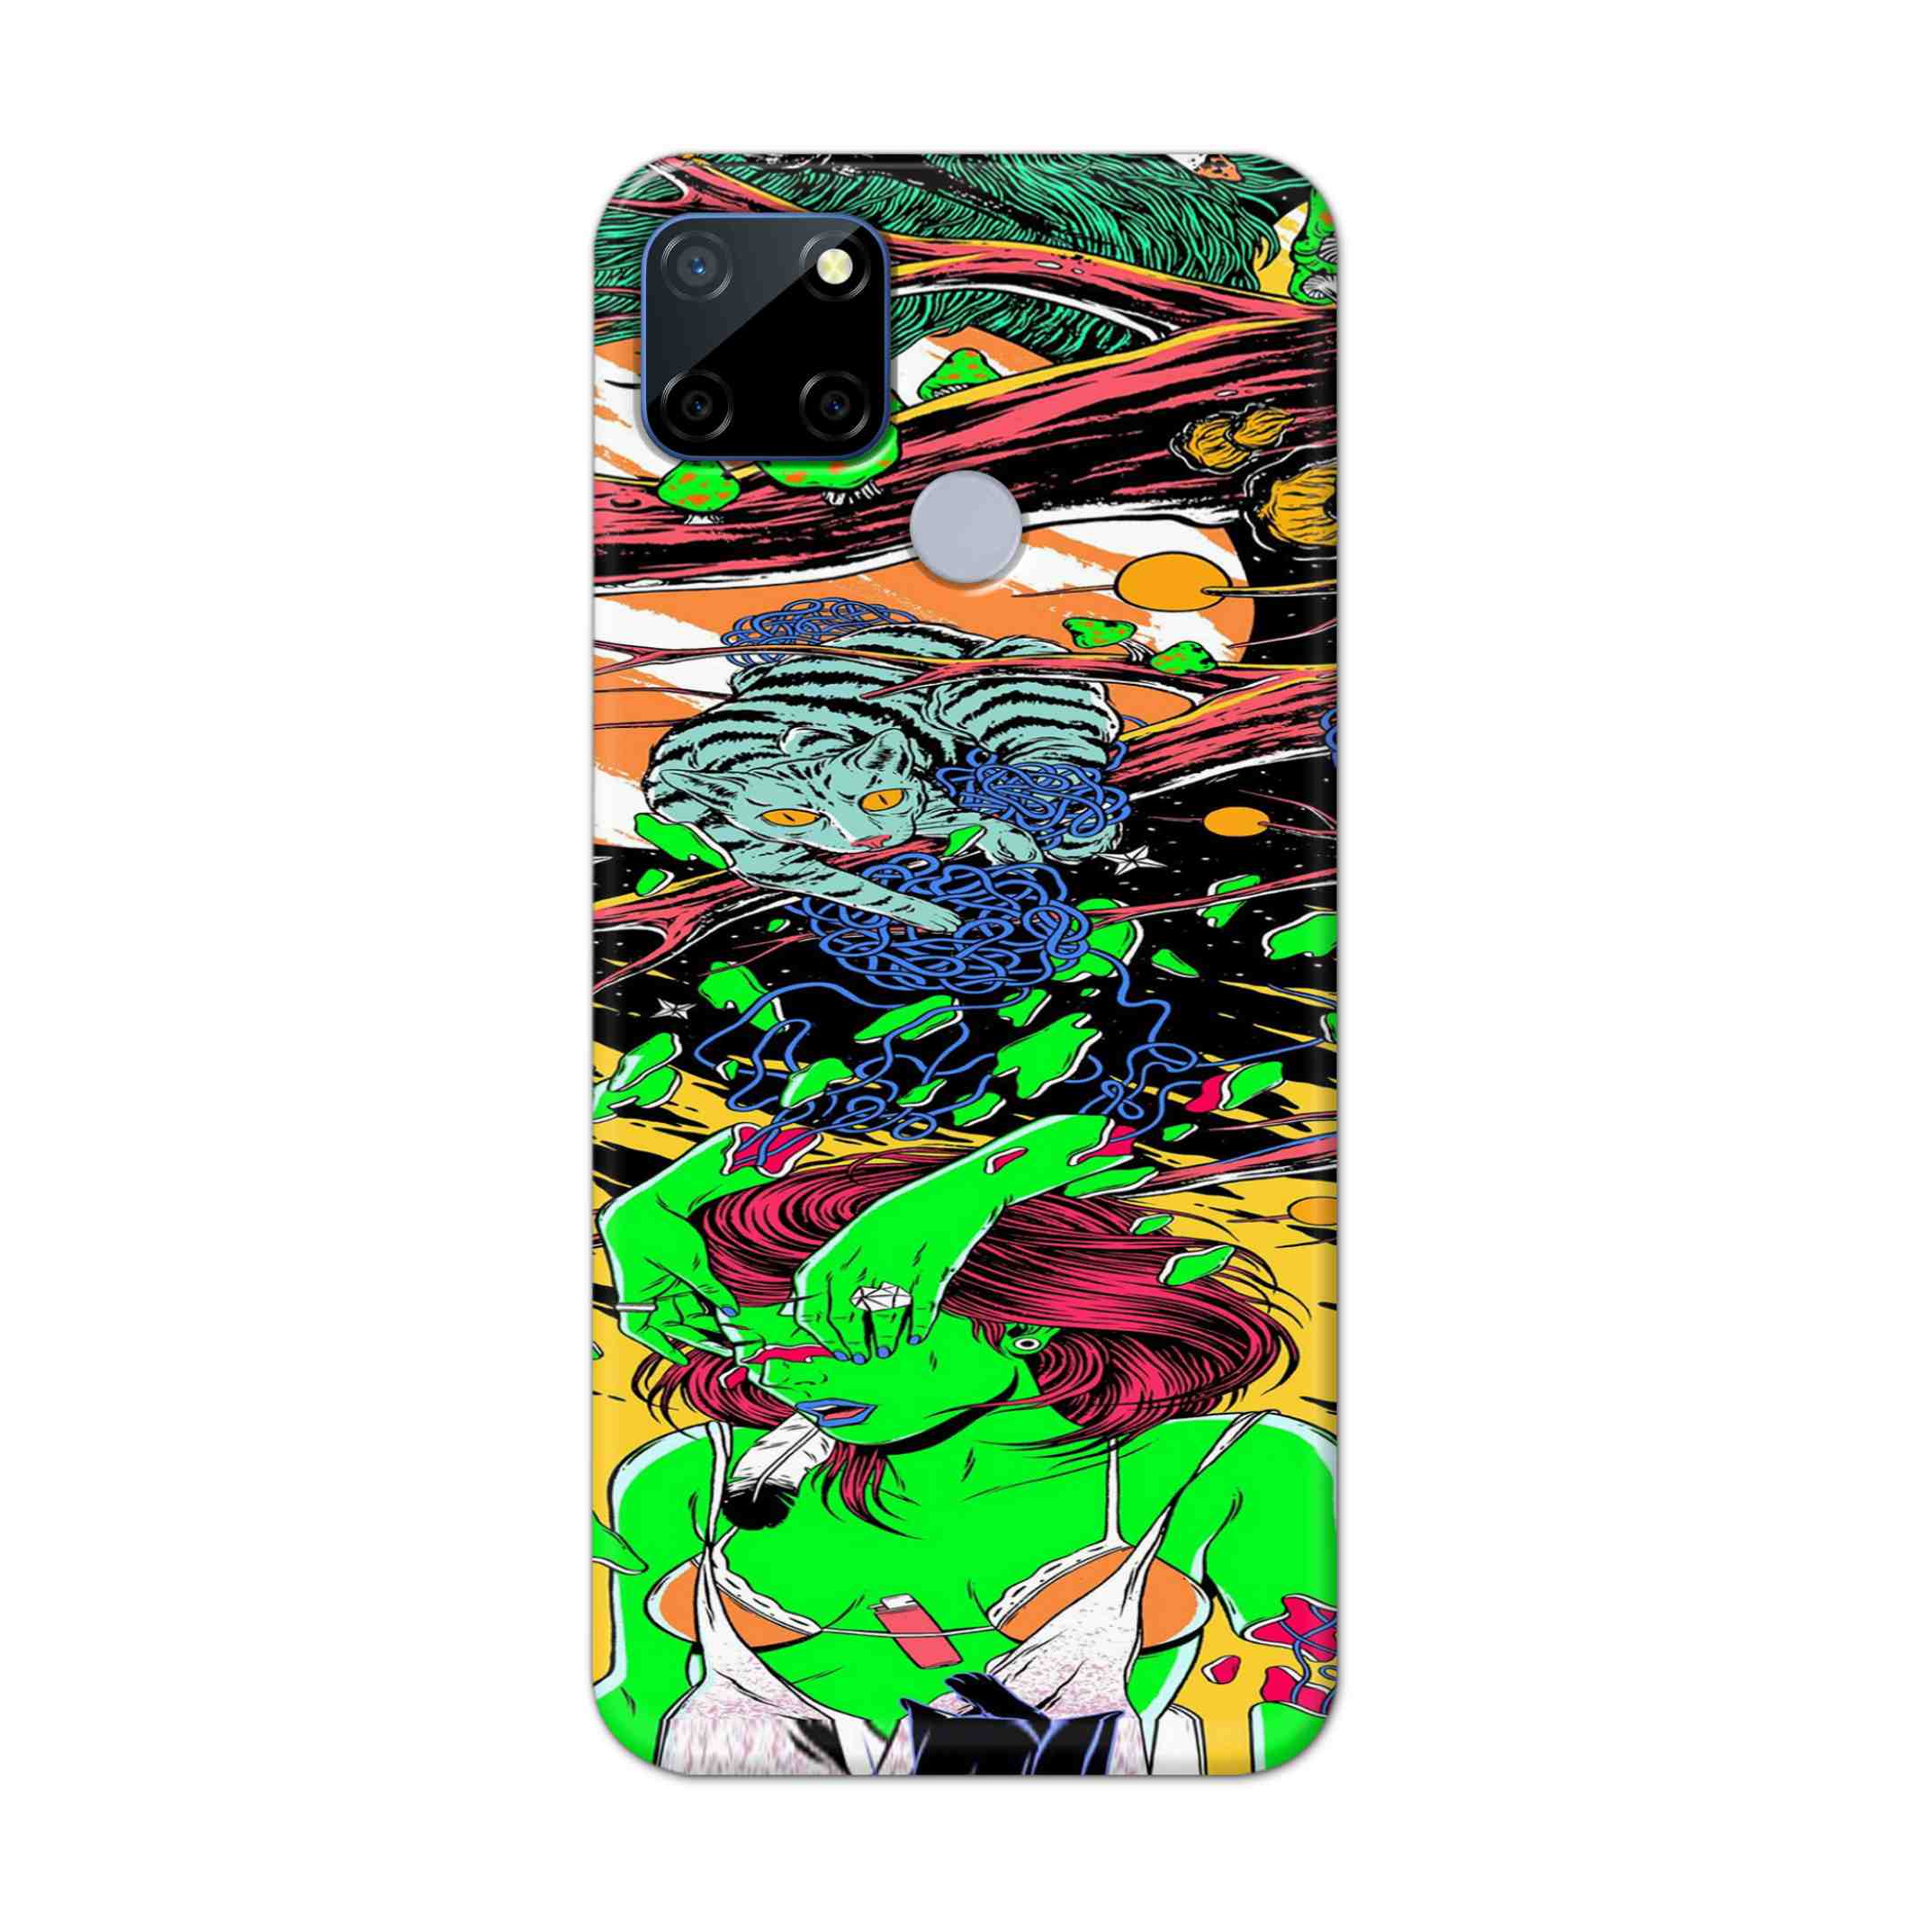 Buy Green Girl Art Hard Back Mobile Phone Case Cover For Realme C12 Online